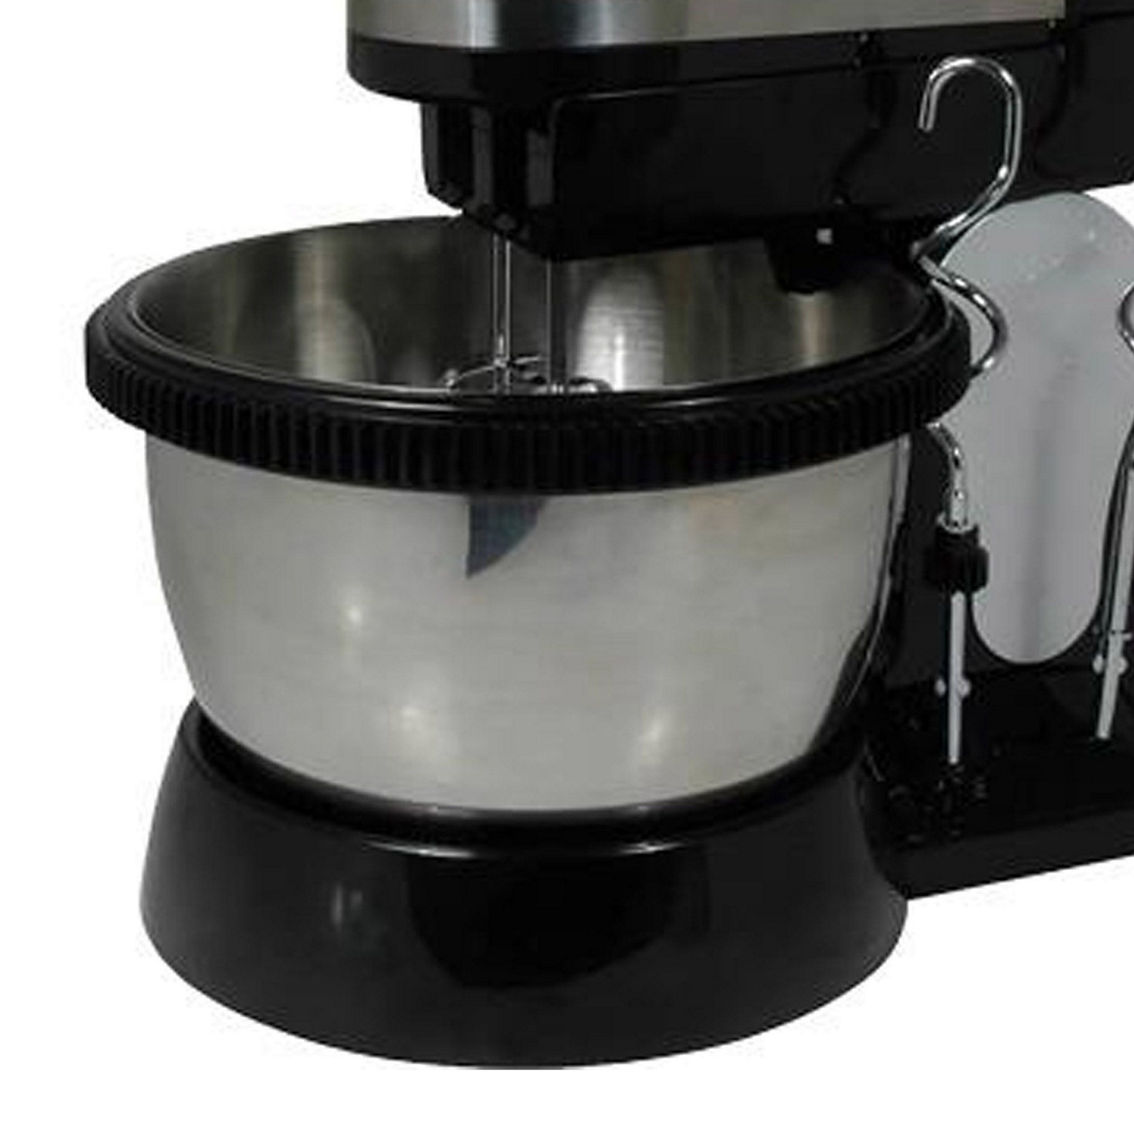 Better Chef 350-Watt Stand/Hand Mixer in Black - Image 3 of 4